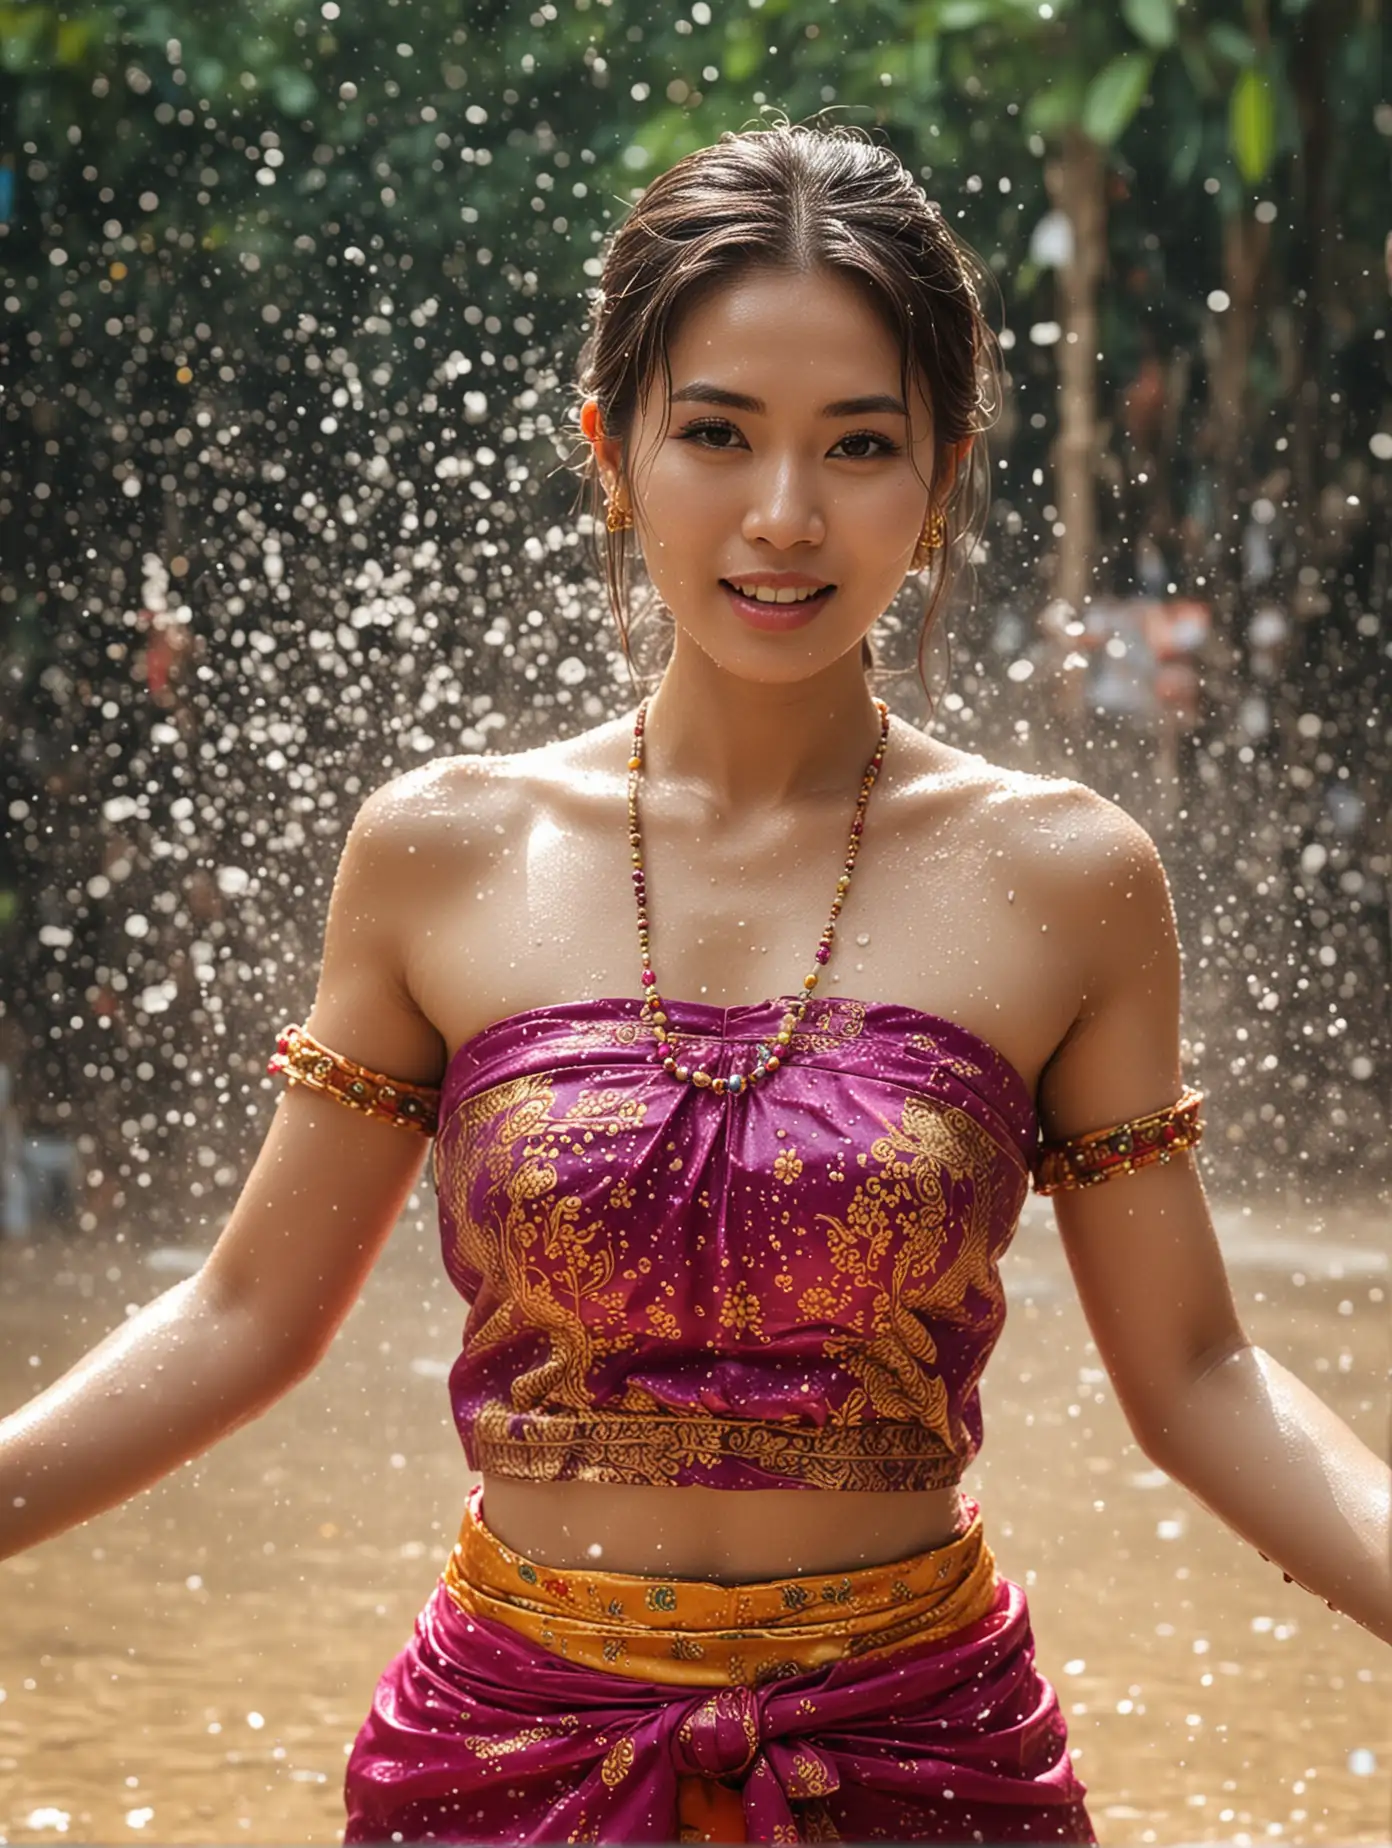 Thai Woman in Traditional Dress Splashing Water at Songkran Festival